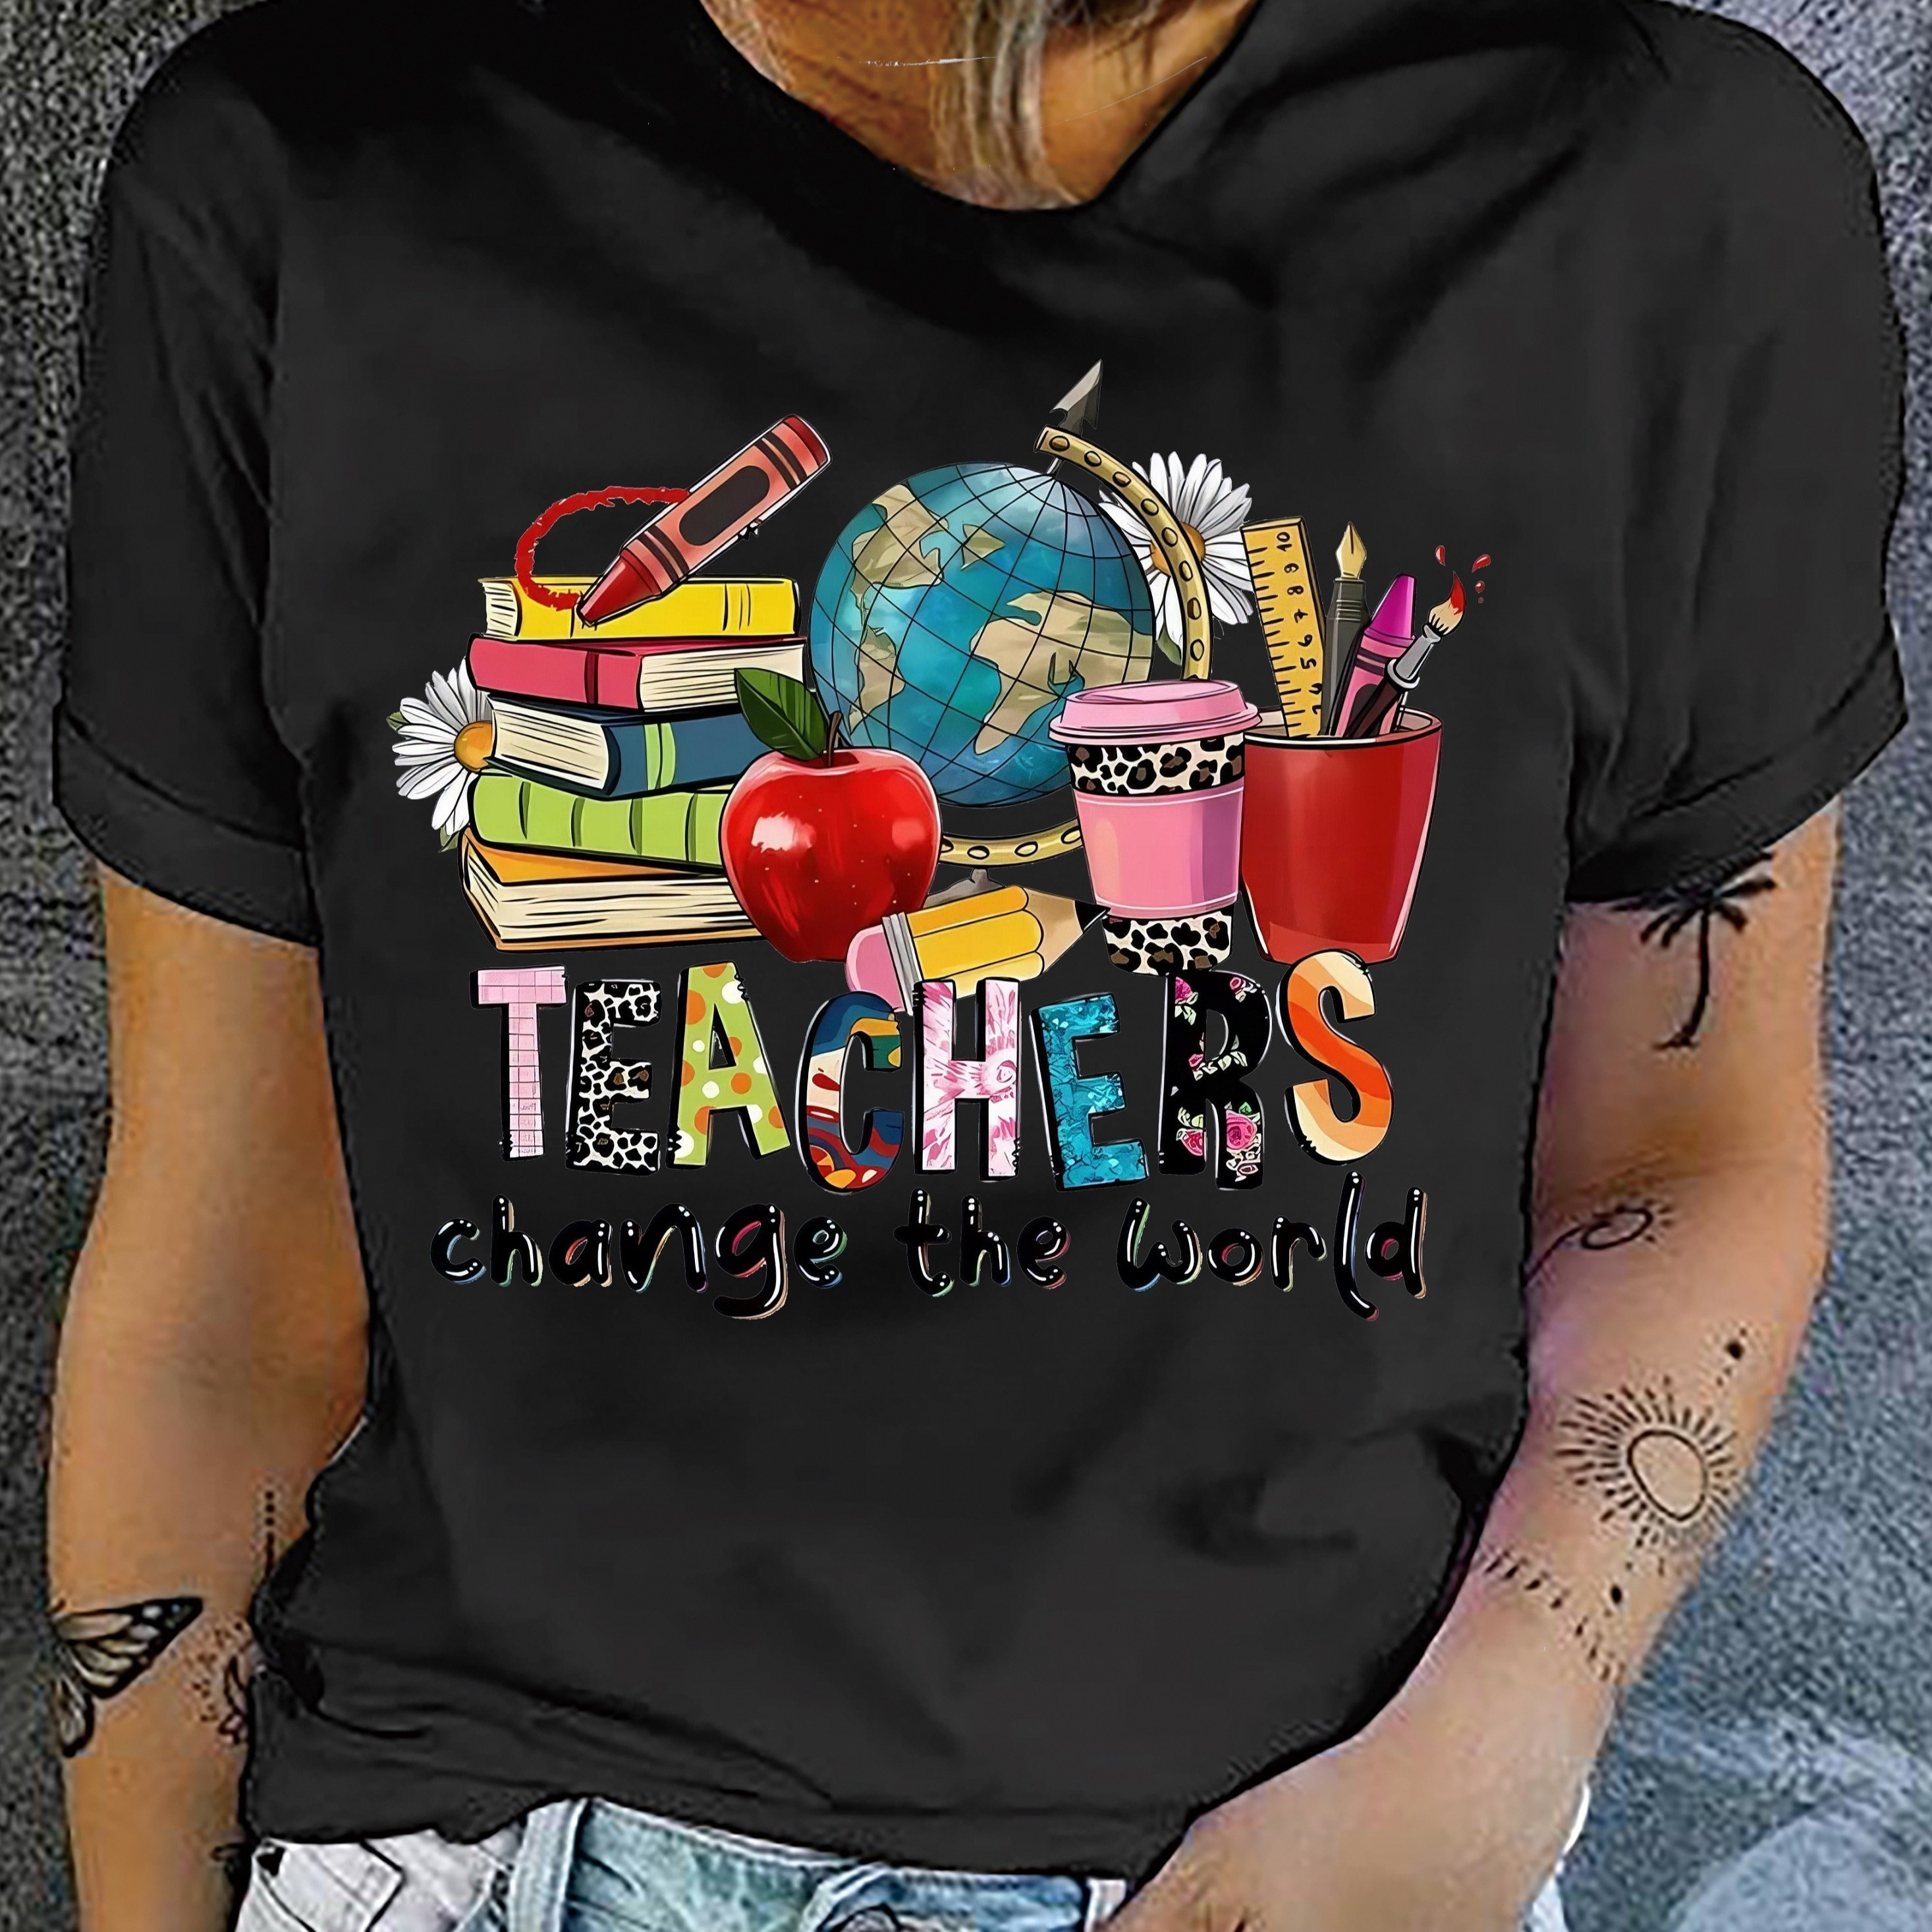 

Teachers & Book Print T-shirt, Short Sleeve Crew Neck Casual Top For Summer & Spring, Women's Clothing